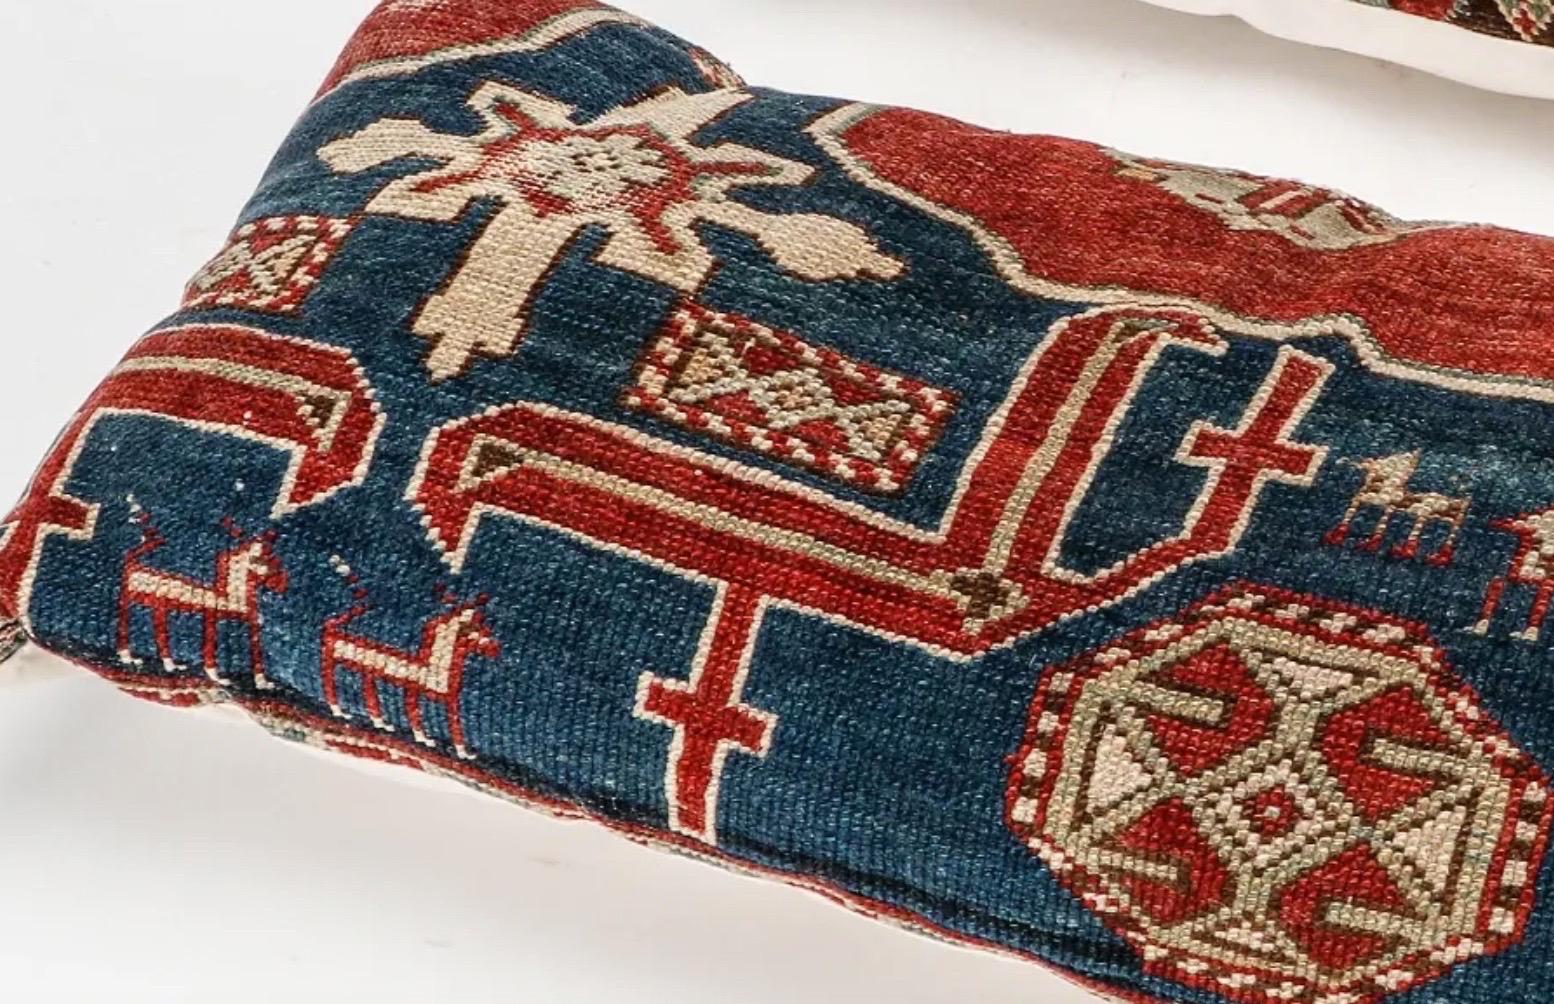 Lovely Antique Persian Tribal Lumbar Rug Pillow (Oreiller)

La plus grande mesure : 17 x 7 x 5 pouces 

